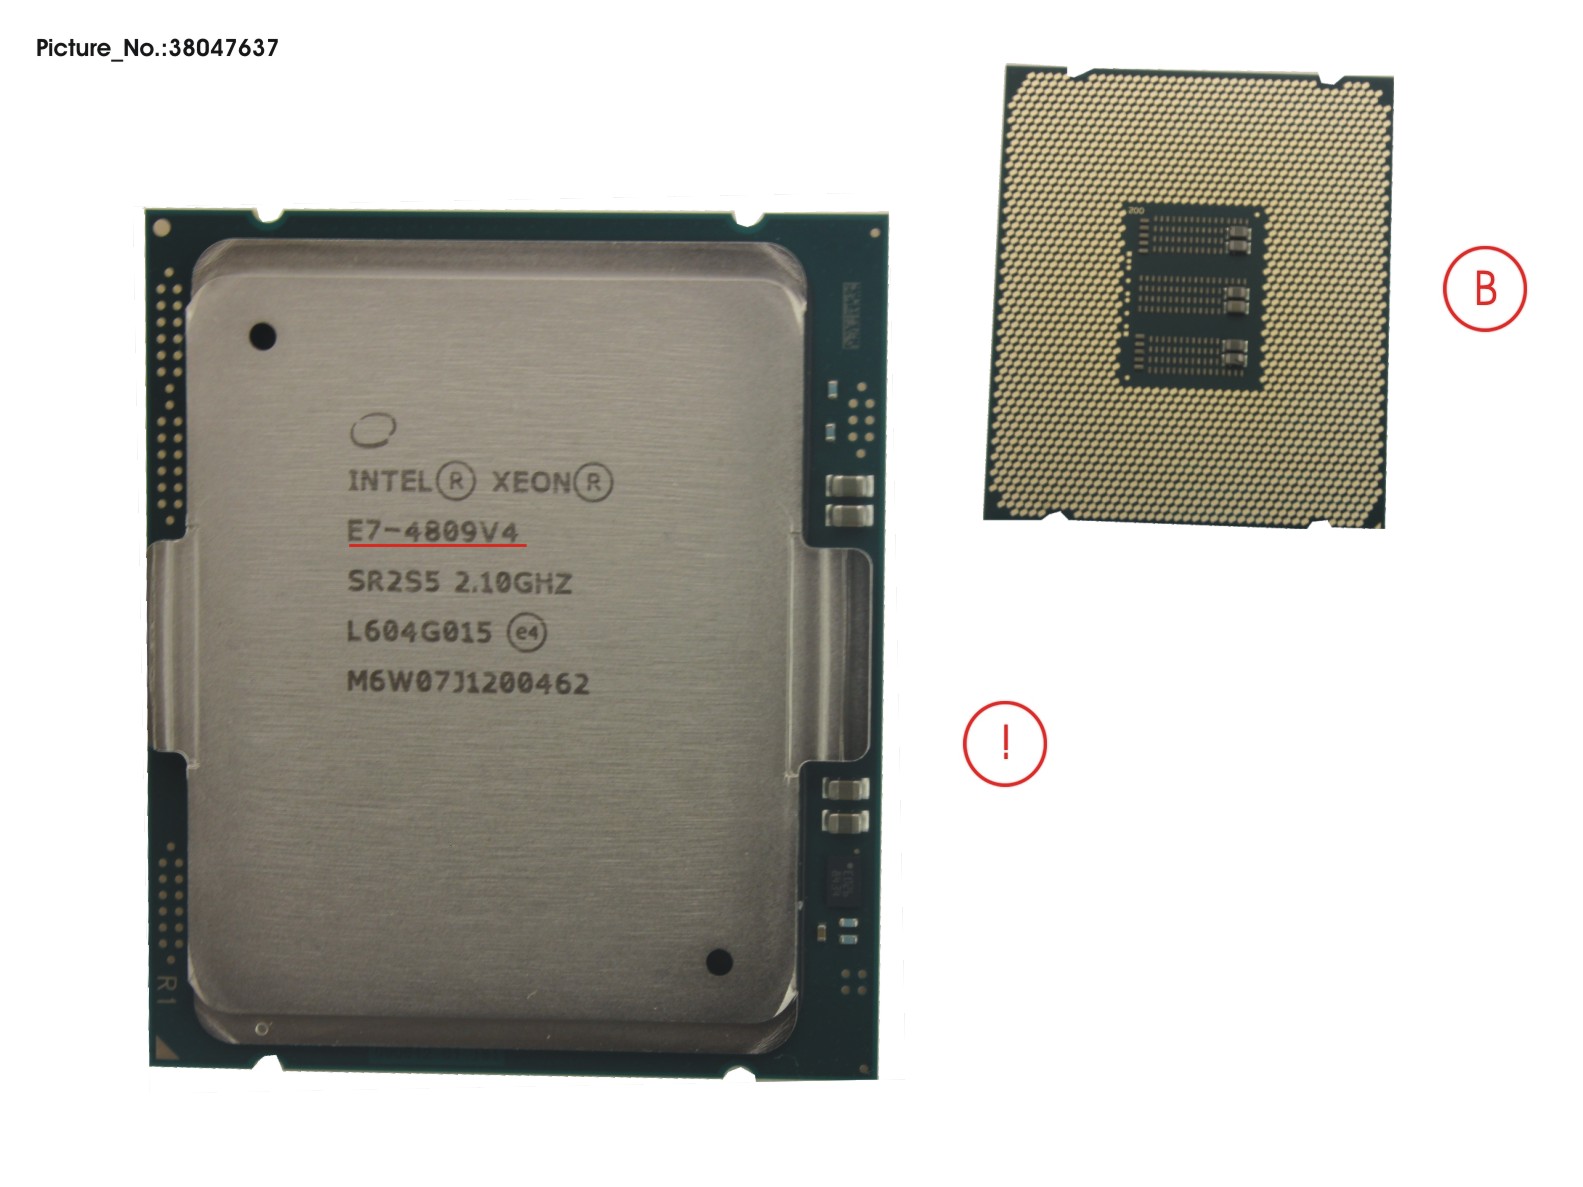 CPU XEON E7-4809V4 2,1GHZ 115W